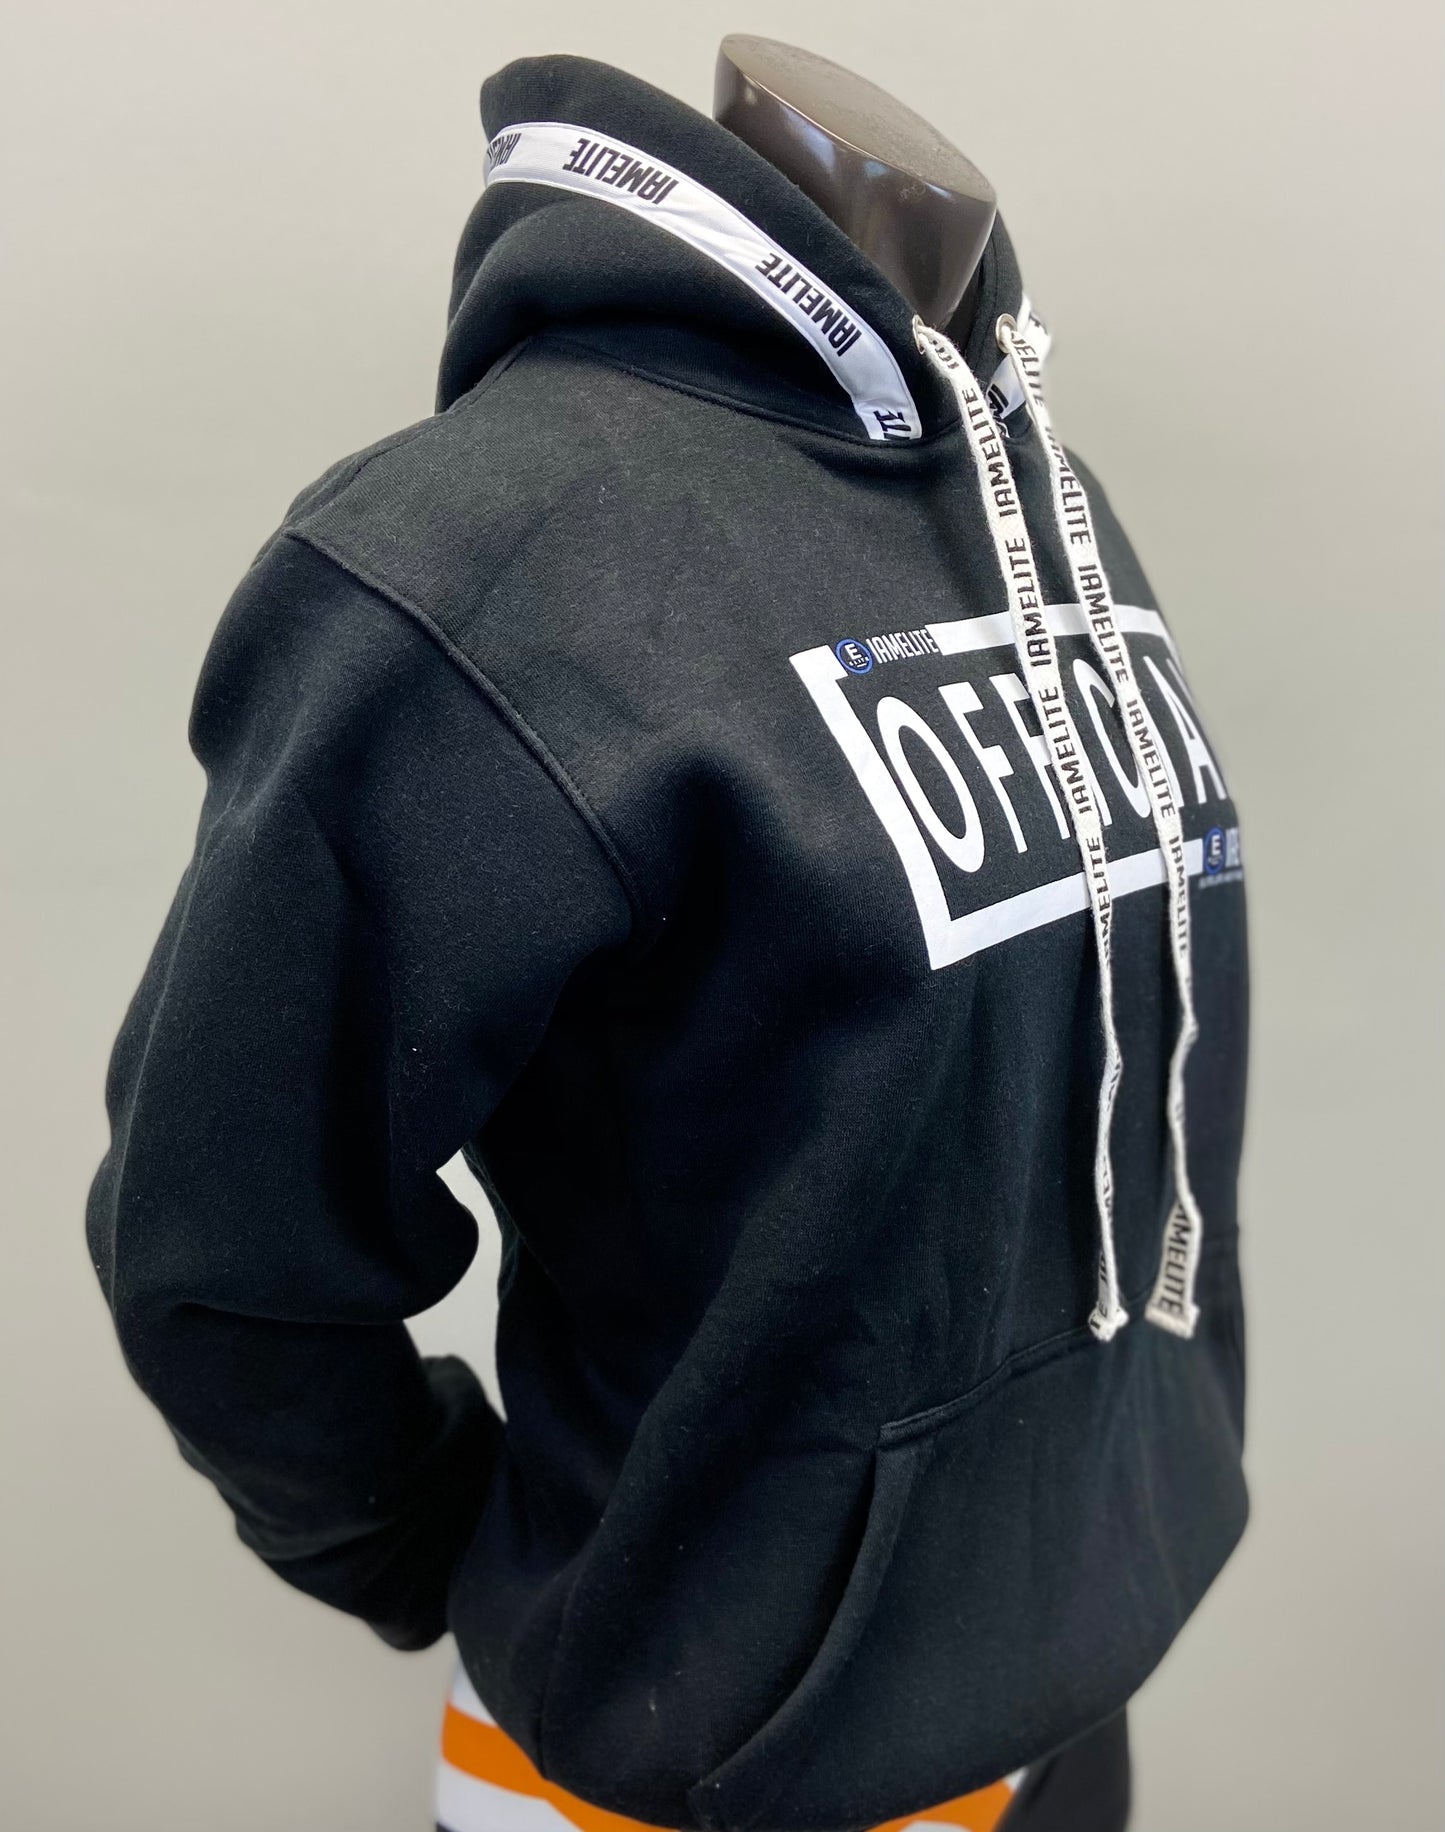 IAEGEAR™ OFFICIAL Collection Unisex Long Sleeve Hooded Black Sweatshirt